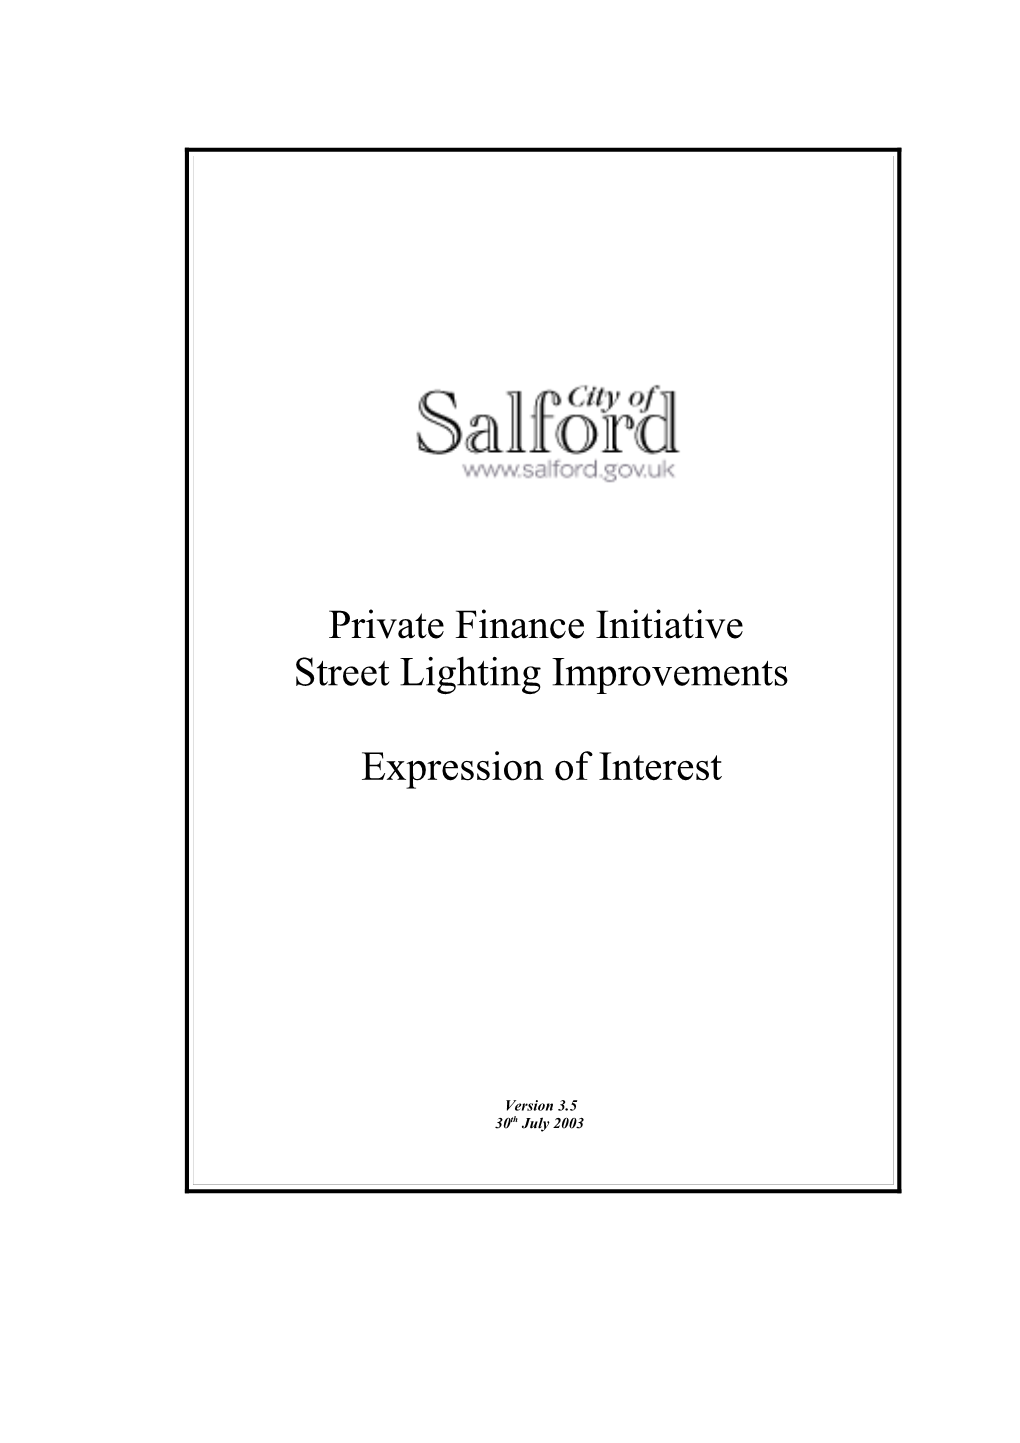 City of Salford Street Lighting Improvements